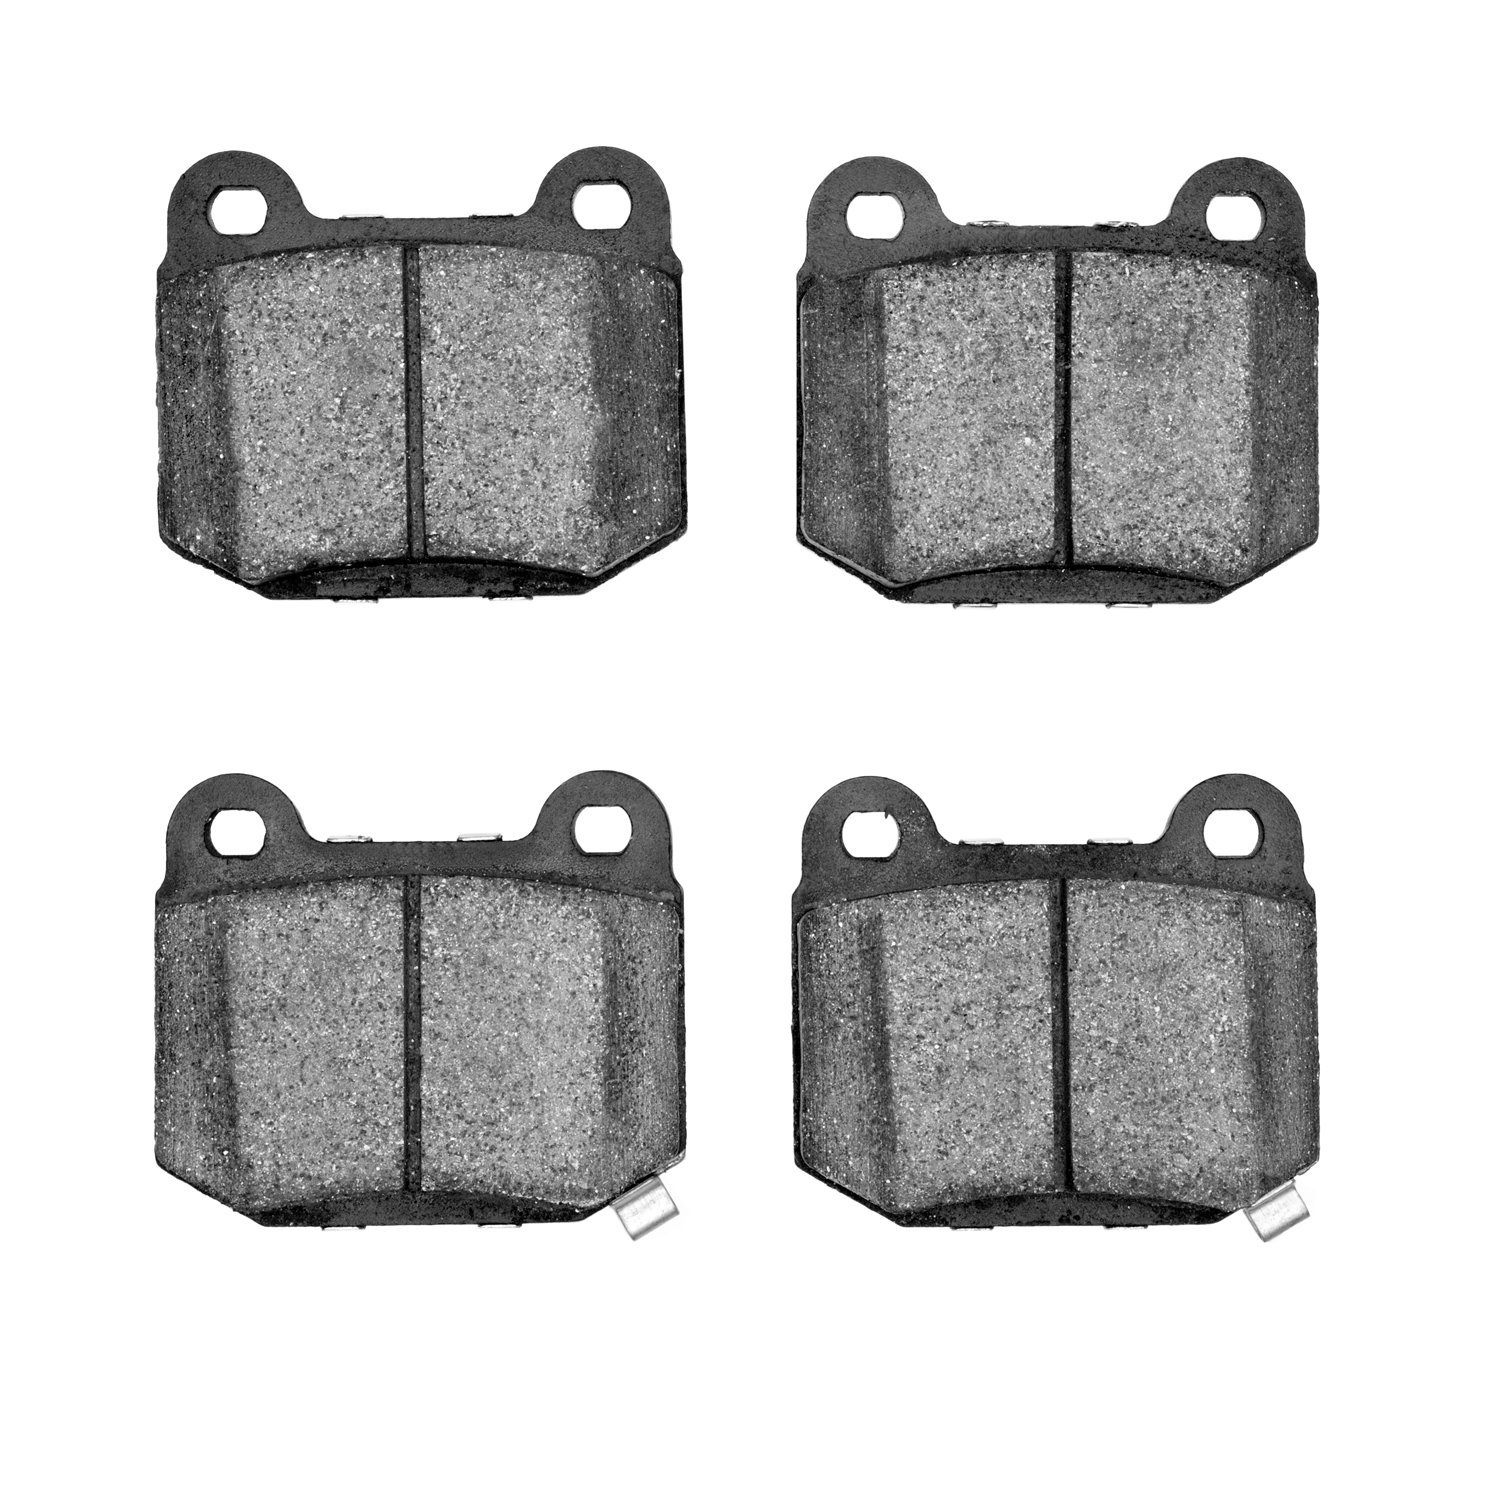 1310-0961-00 3000-Series Ceramic Brake Pads, 2003-2020 Multiple Makes/Models, Position: Rear